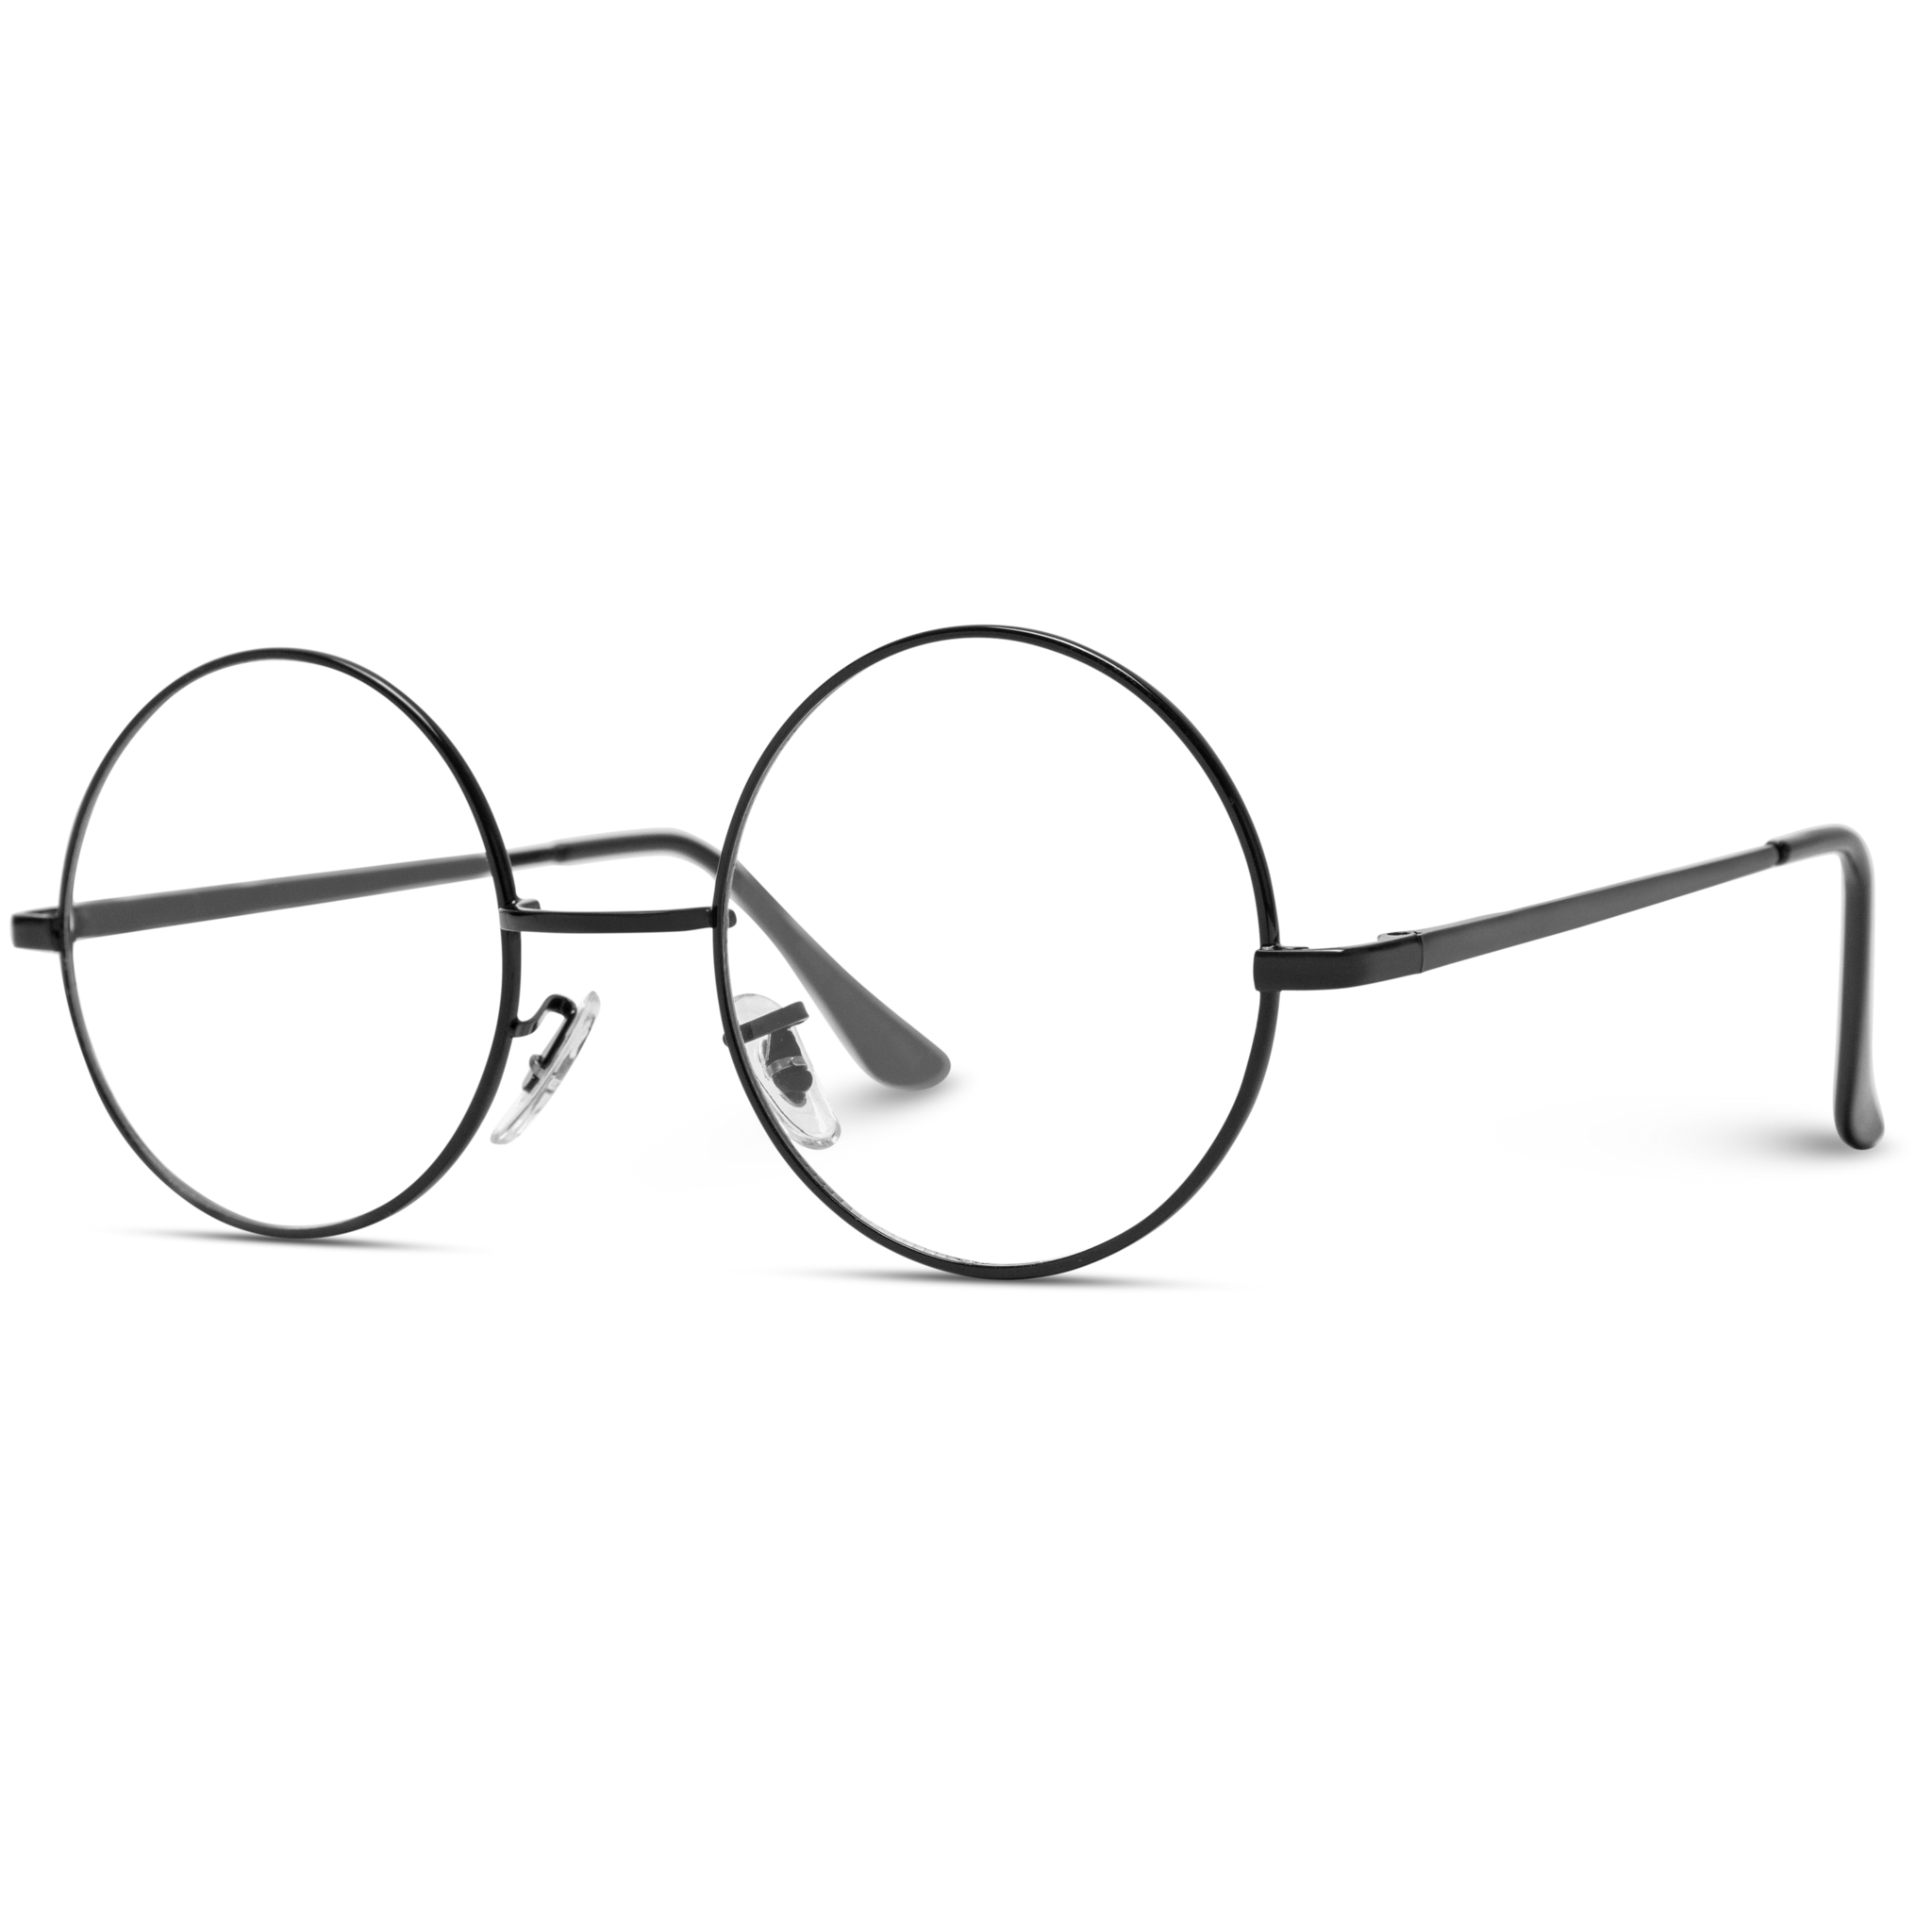 Charley Round Metal Frame Glasses Retro Eyeglasses Wearme Pro